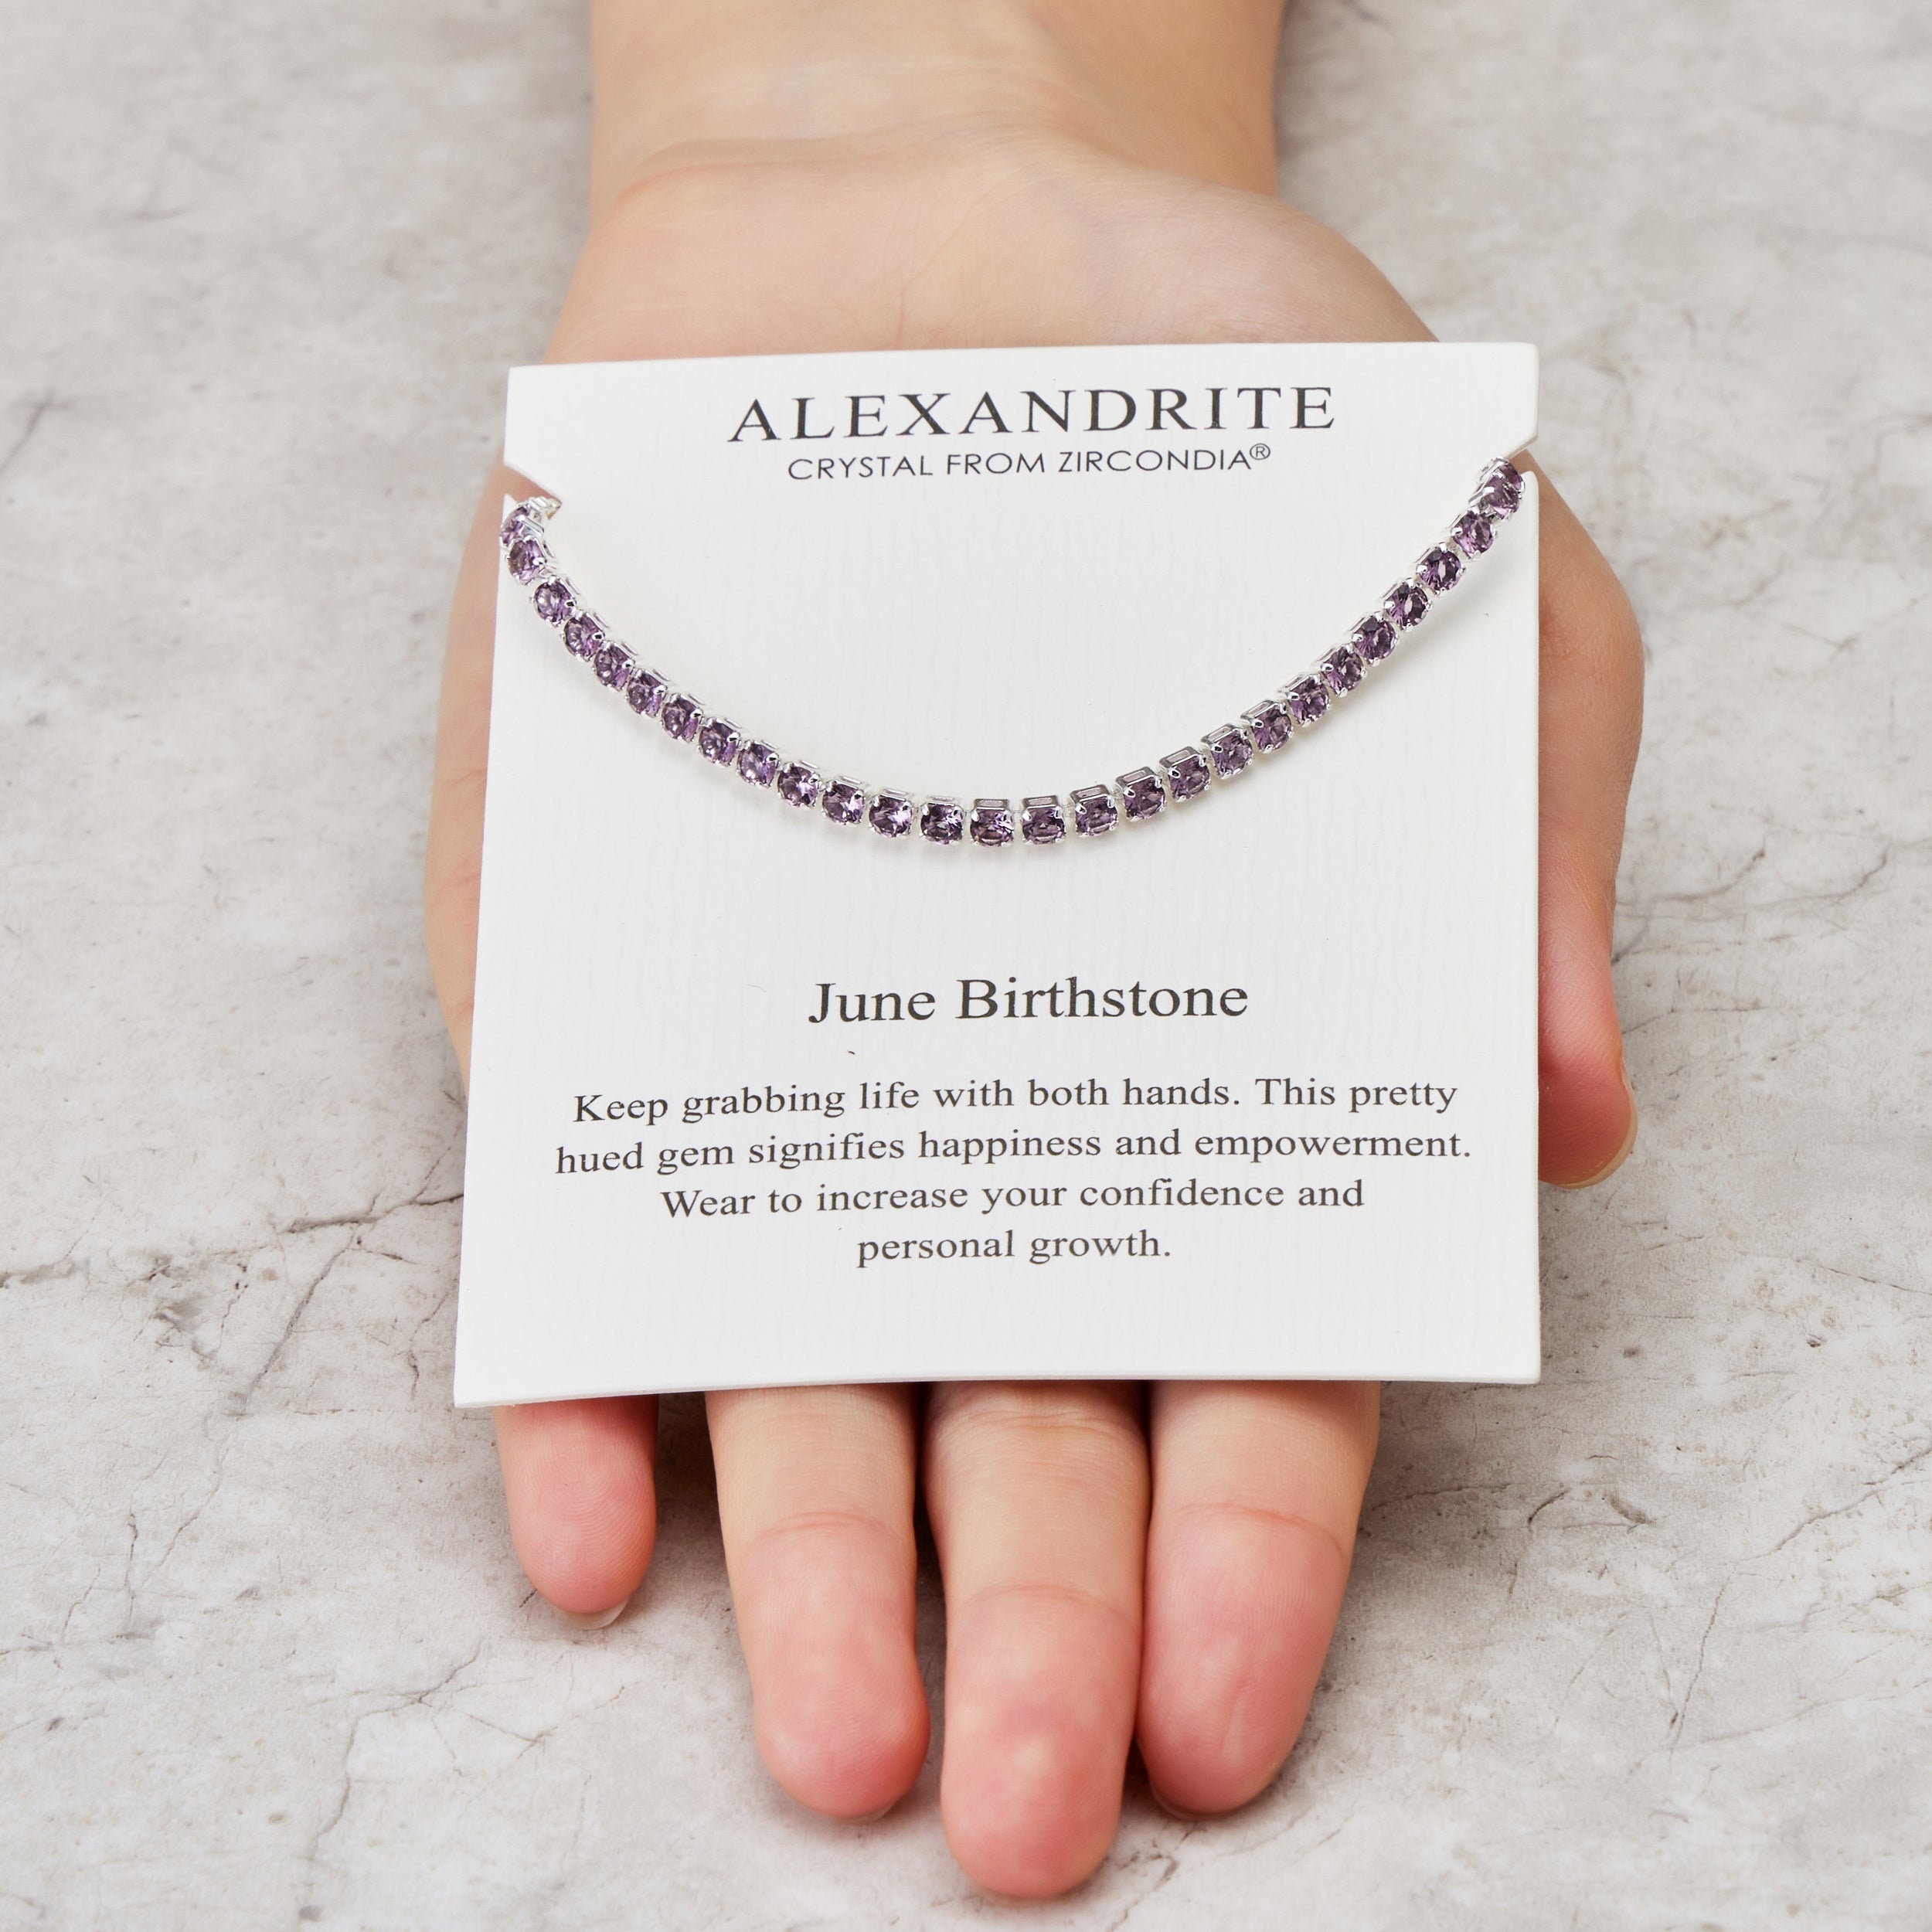 June Birthstone Friendship Bracelet with Alexandrite Zircondia® Crystals